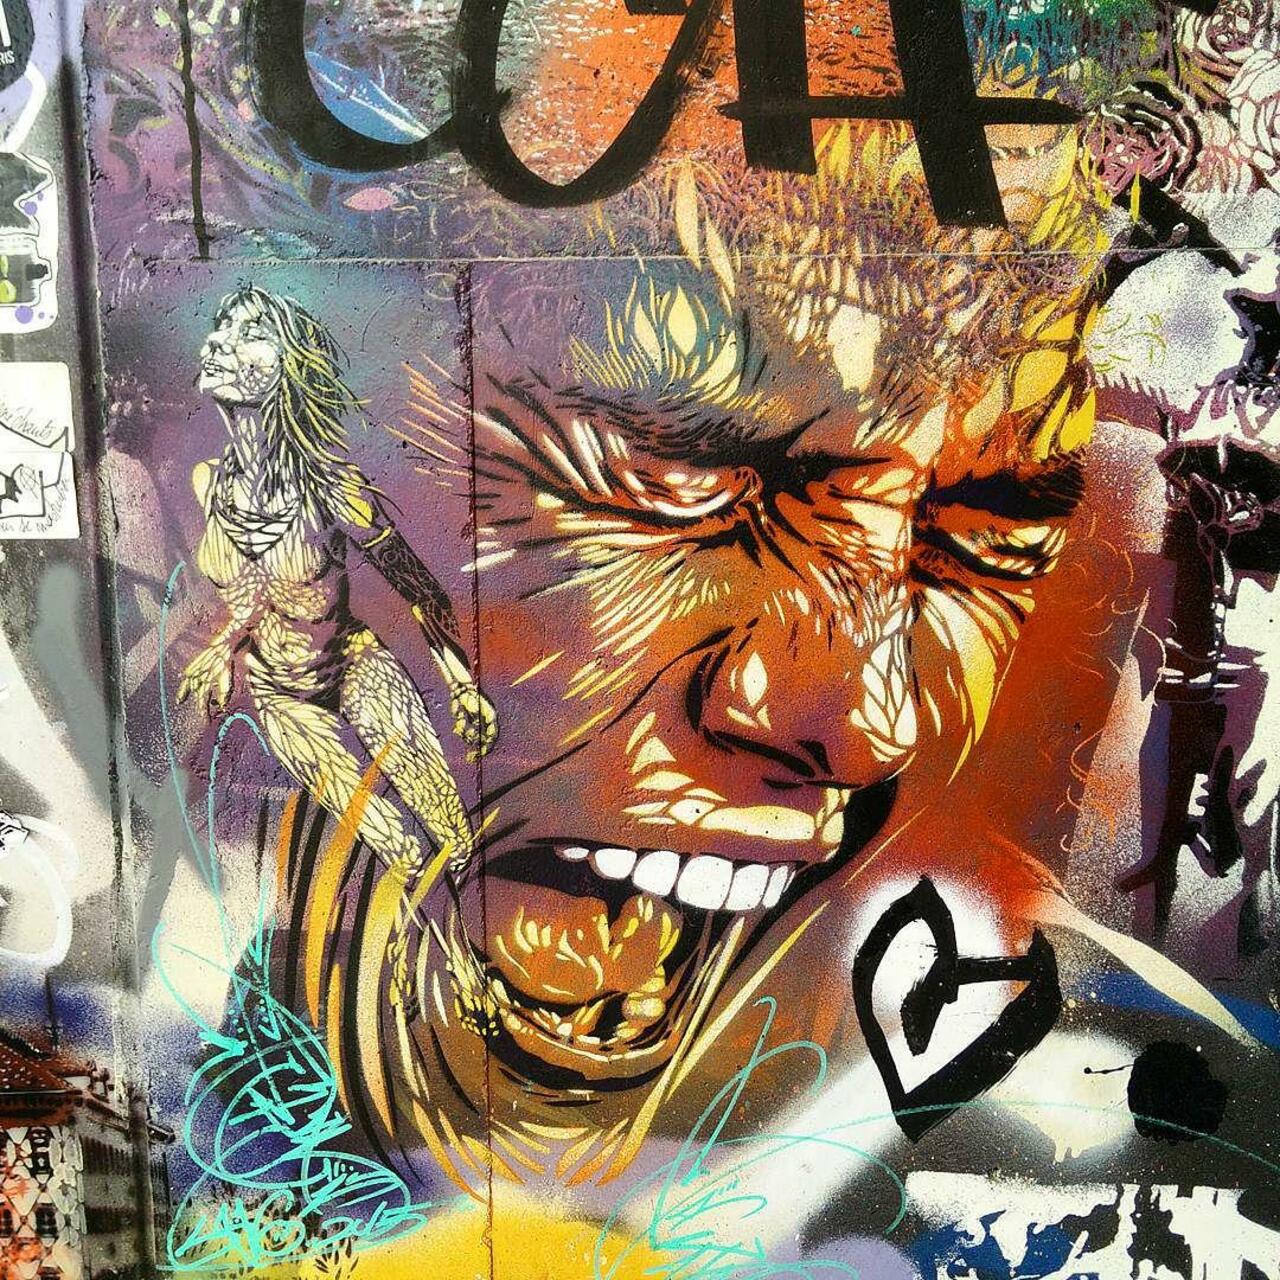 circumjacent_fr: #Paris #graffiti photo by ceky_art http://ift.tt/1KQqOHX #StreetArt http://t.co/w9jbwf3eYi